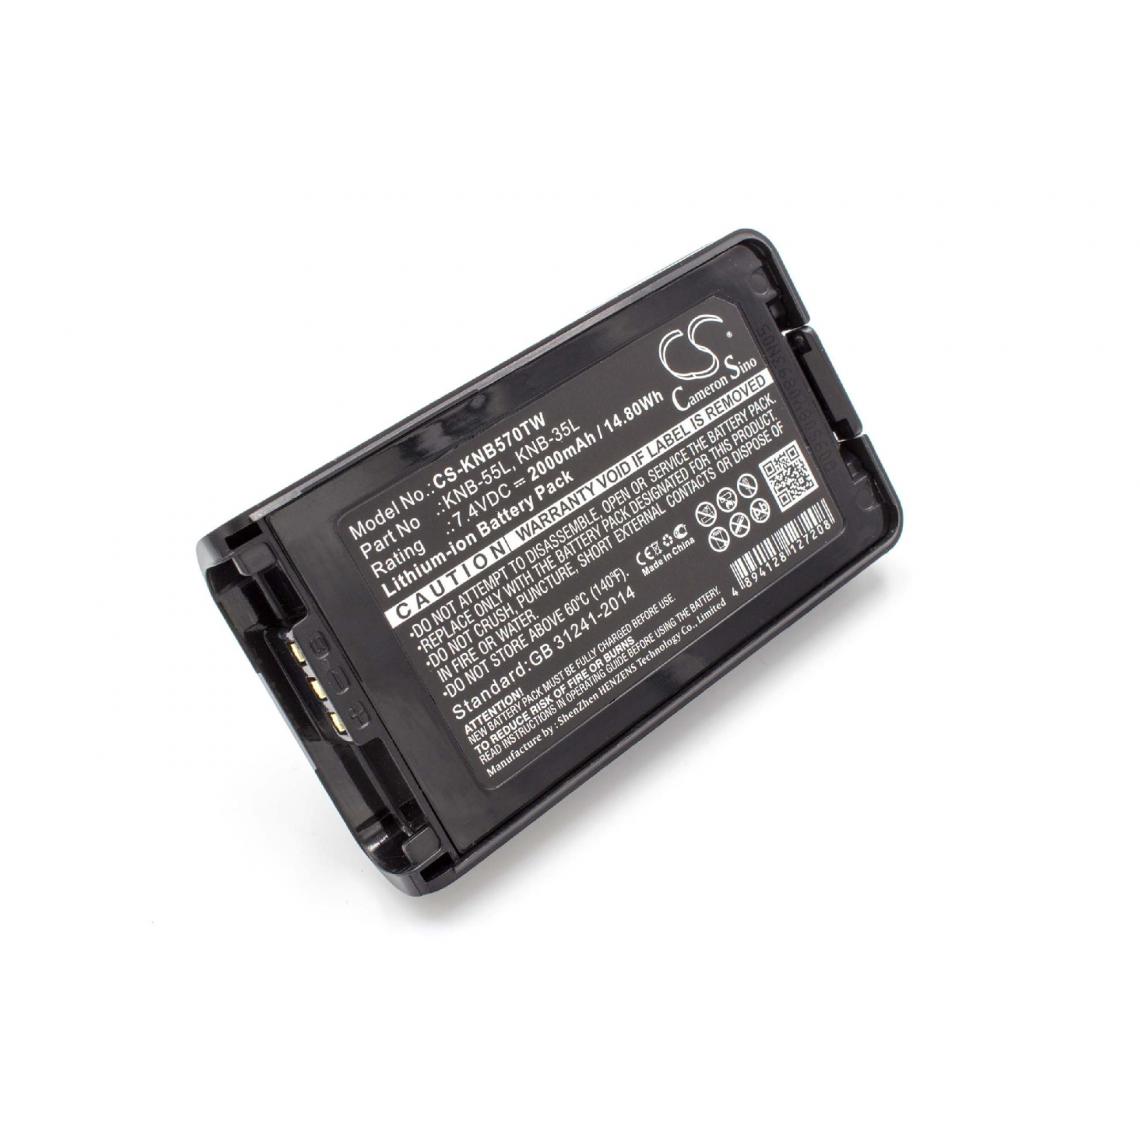 Vhbw - vhbw Batterie compatible avec Kenwood TK-3170E6, TK-3173, TK-3173K, TK-3178, TK-3360, TK-3360E radio talkie-walkie (2000mAh, 7,4V, Li-ion) - Autres accessoires smartphone